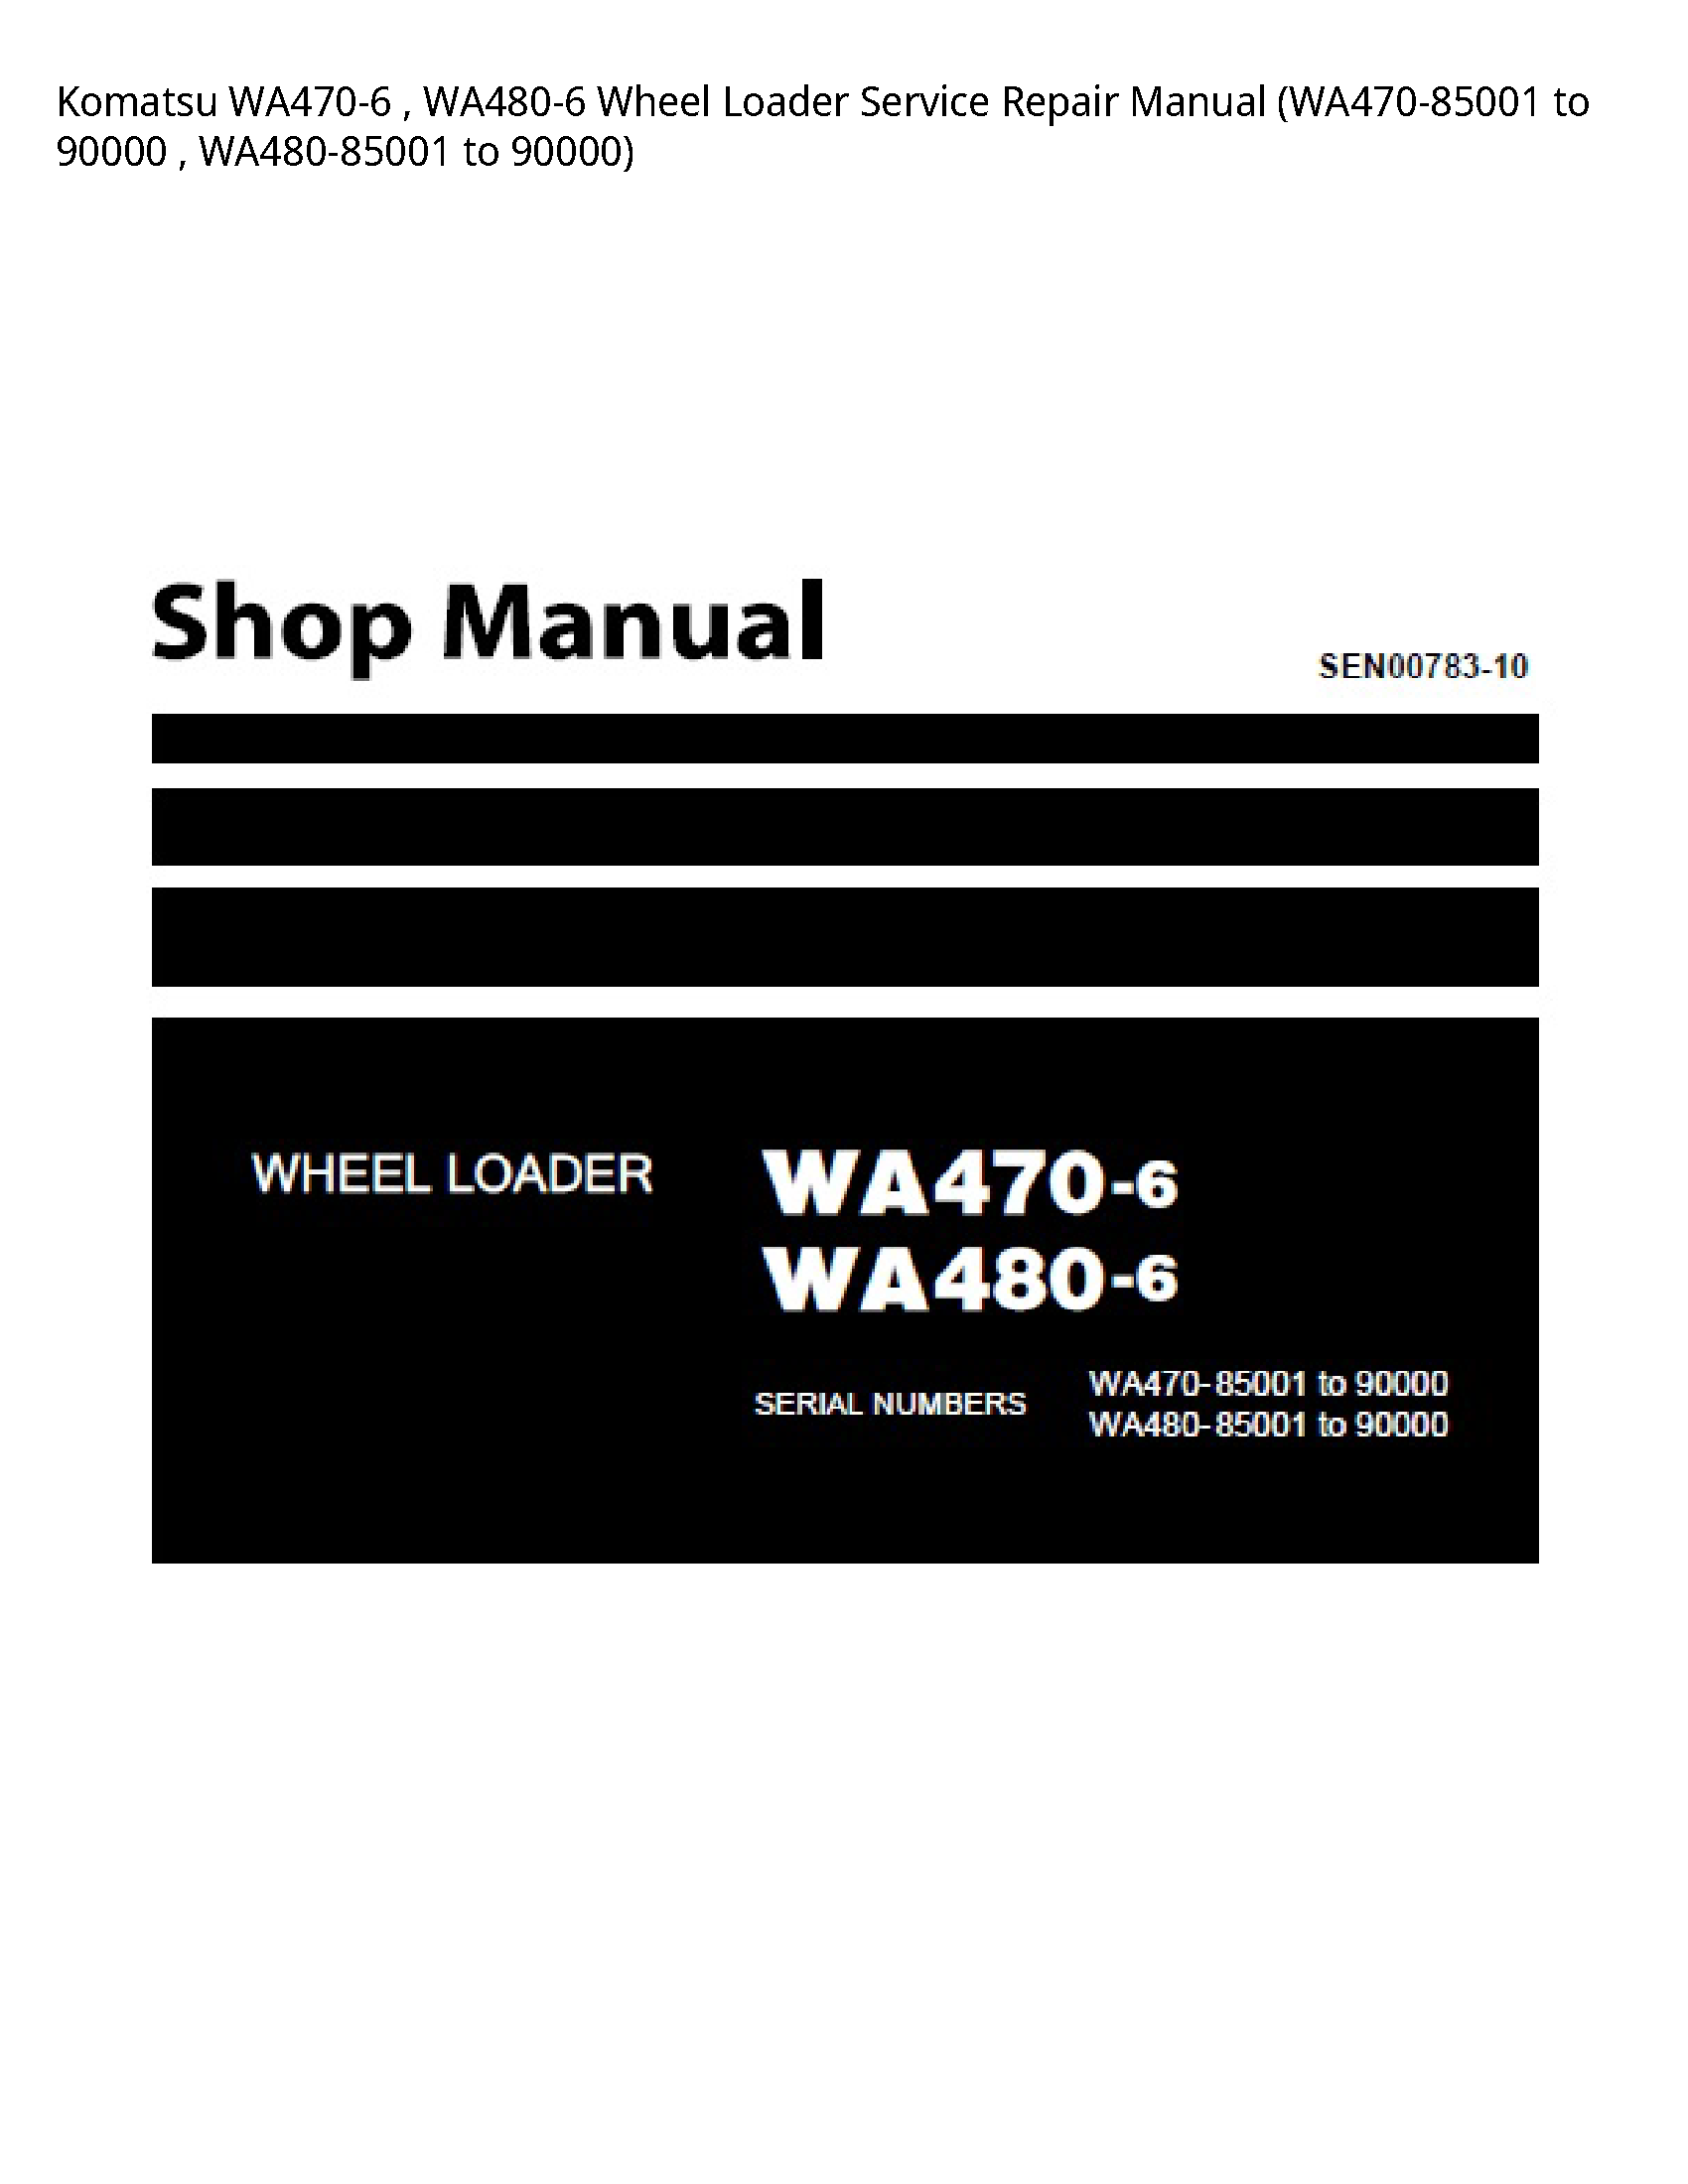 KOMATSU WA470-6 Wheel Loader manual